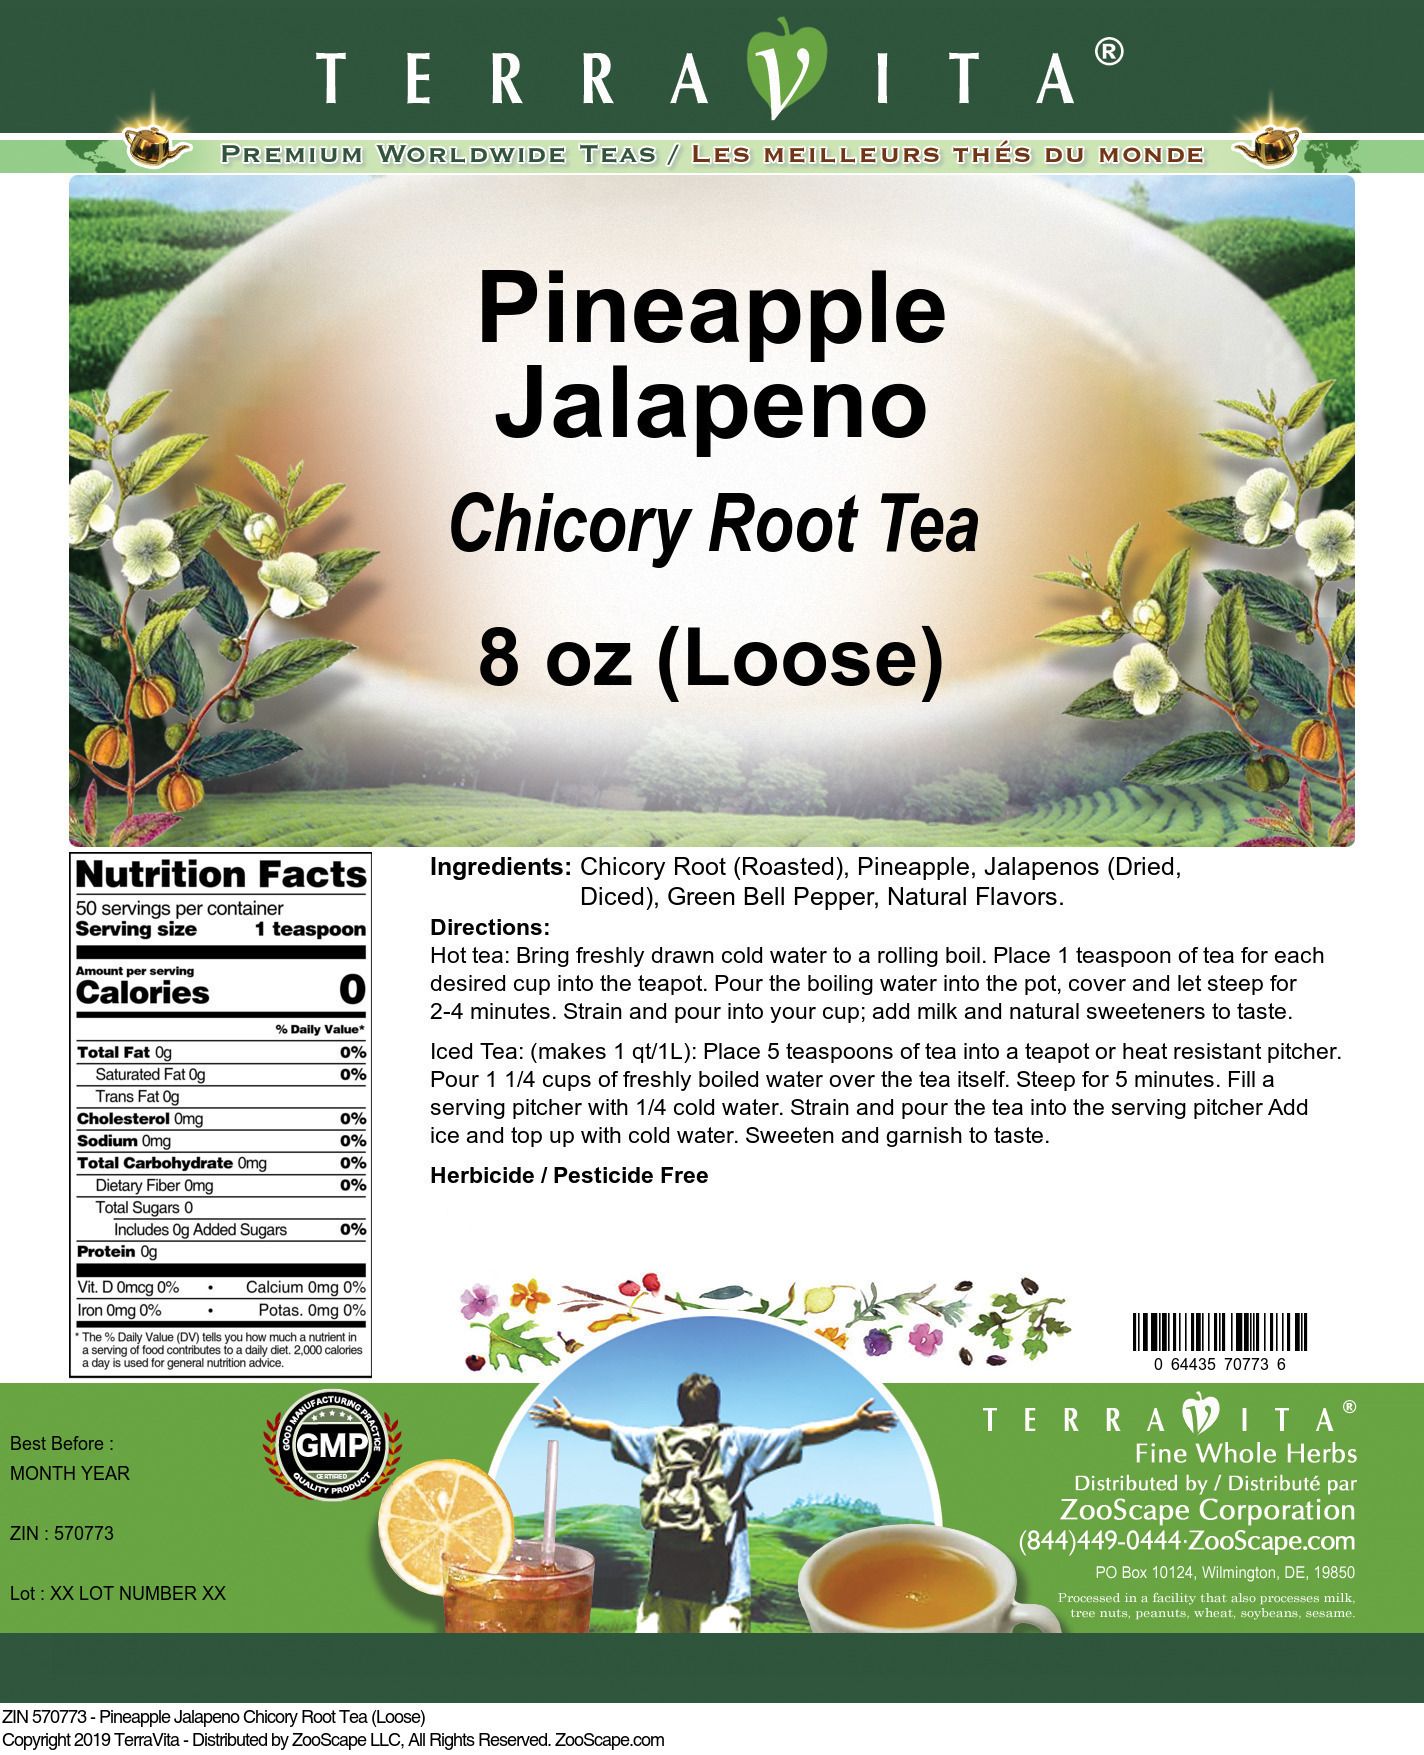 Pineapple Jalapeno Chicory Root Tea (Loose) - Label